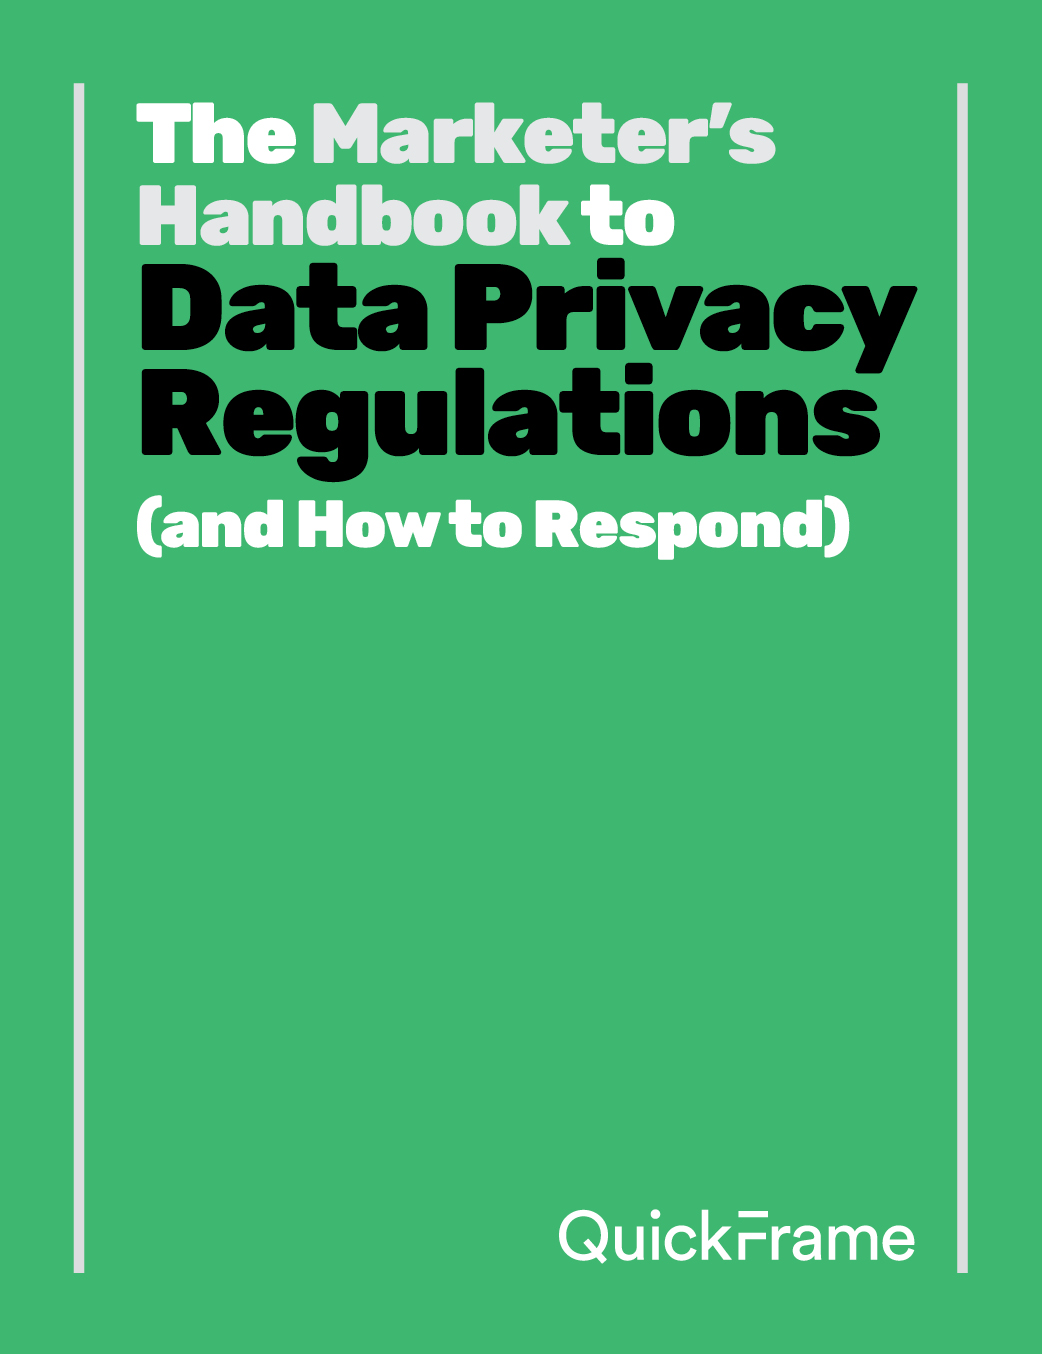 The Marketer’s Handbook to Data Privacy Regulations